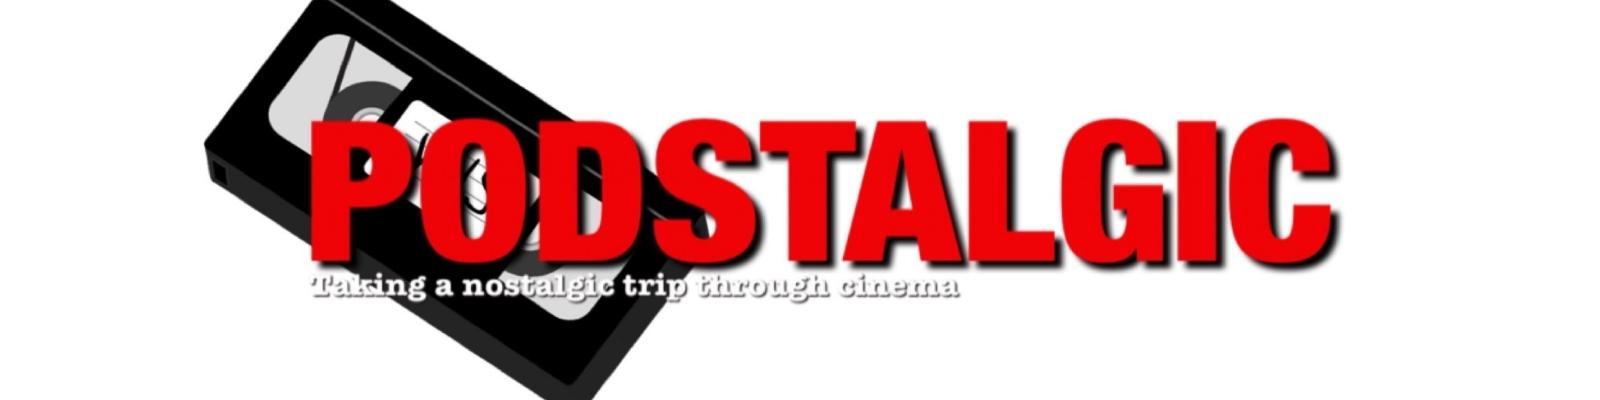 Podstalgic: A Film Podcast